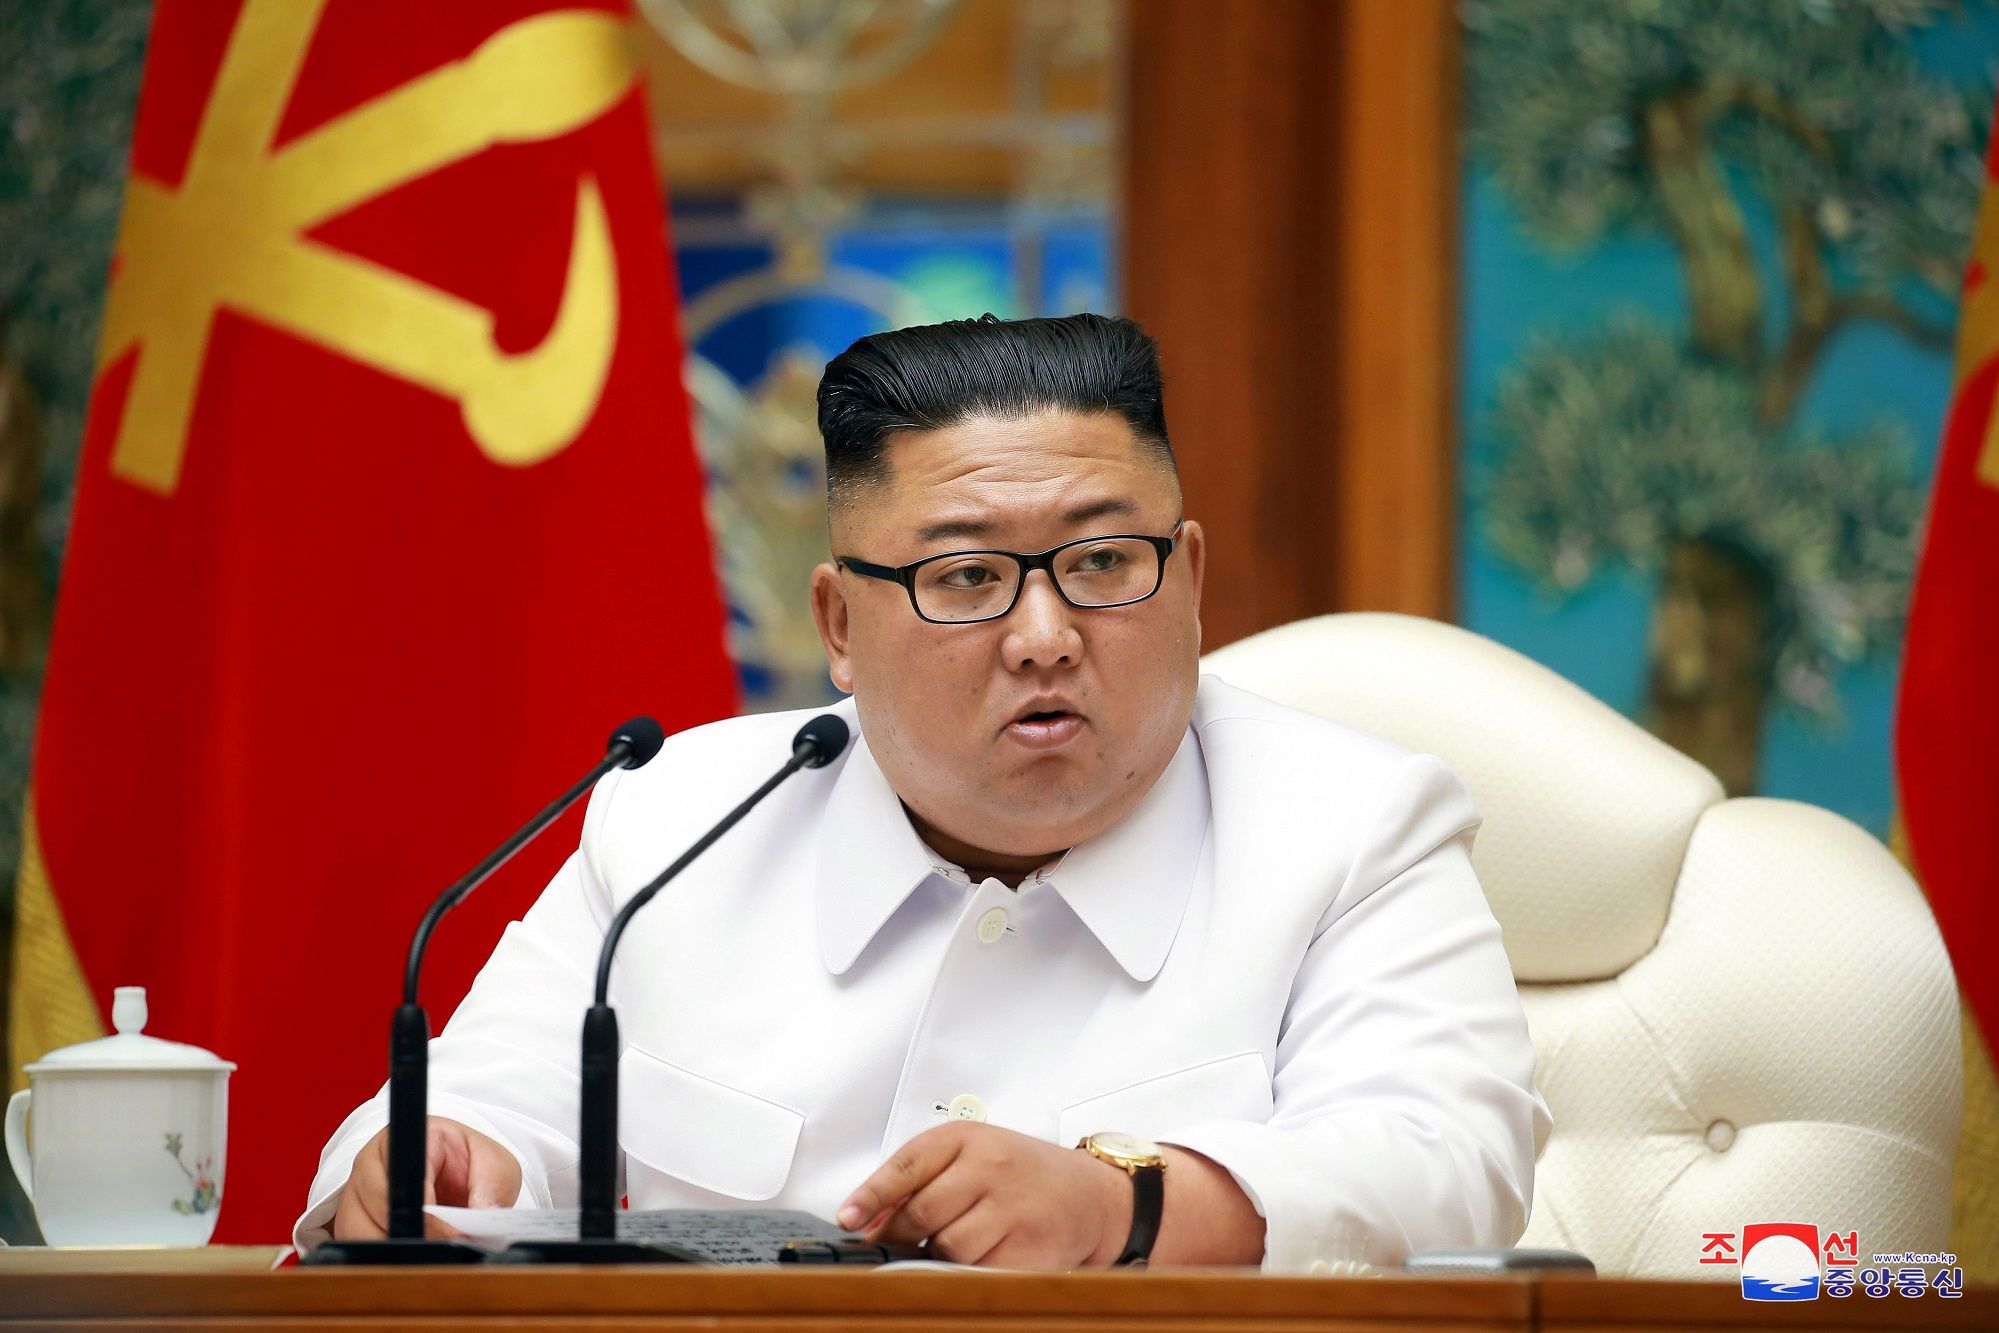 Kim Jong Un Tolak Bantuan Internasional, Takut Virus Corona Kembali Menyebar